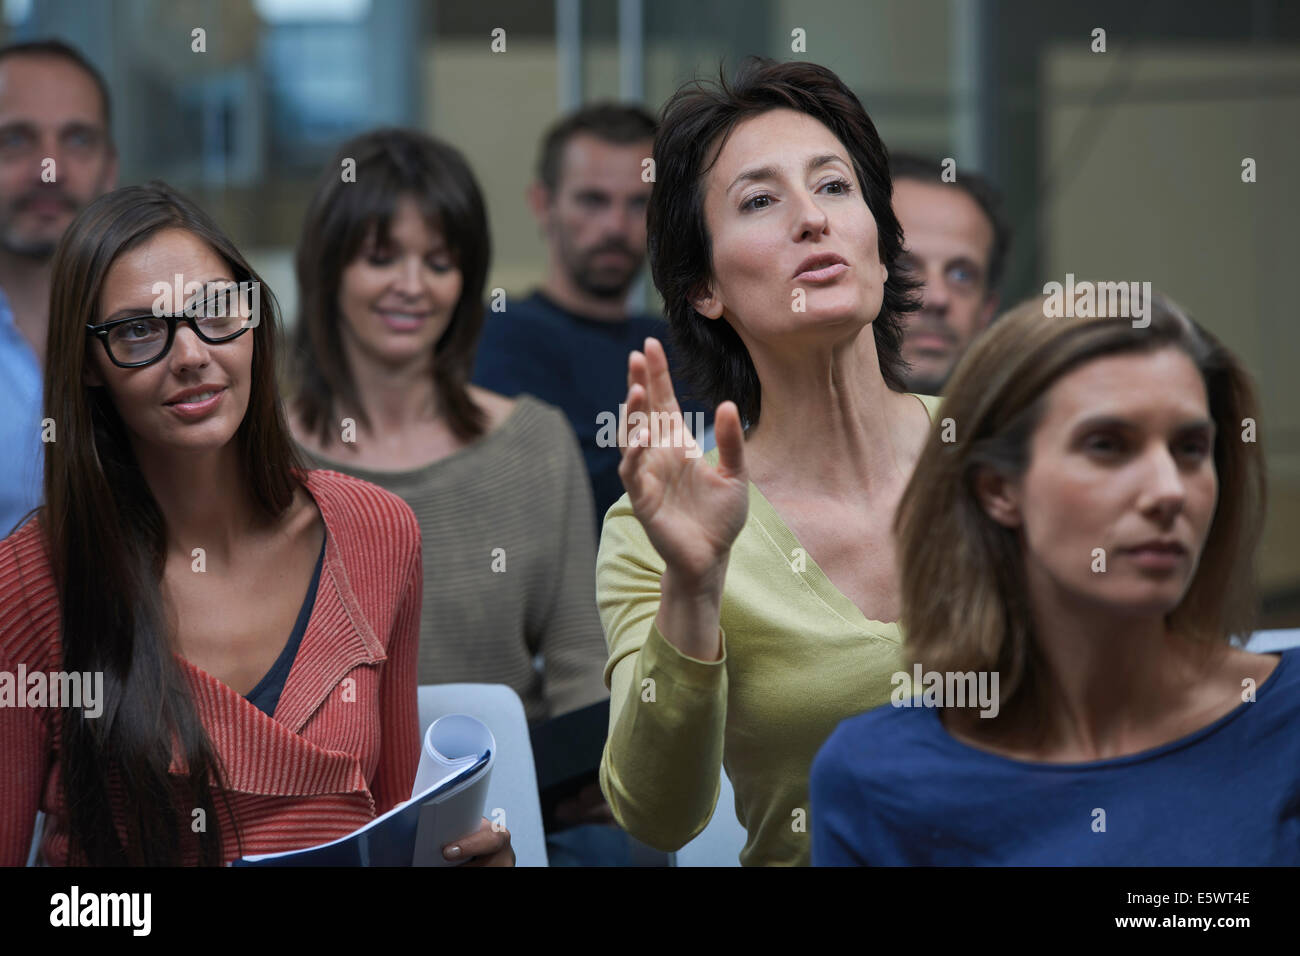 Group watching presentation, woman raising hand Stock Photo